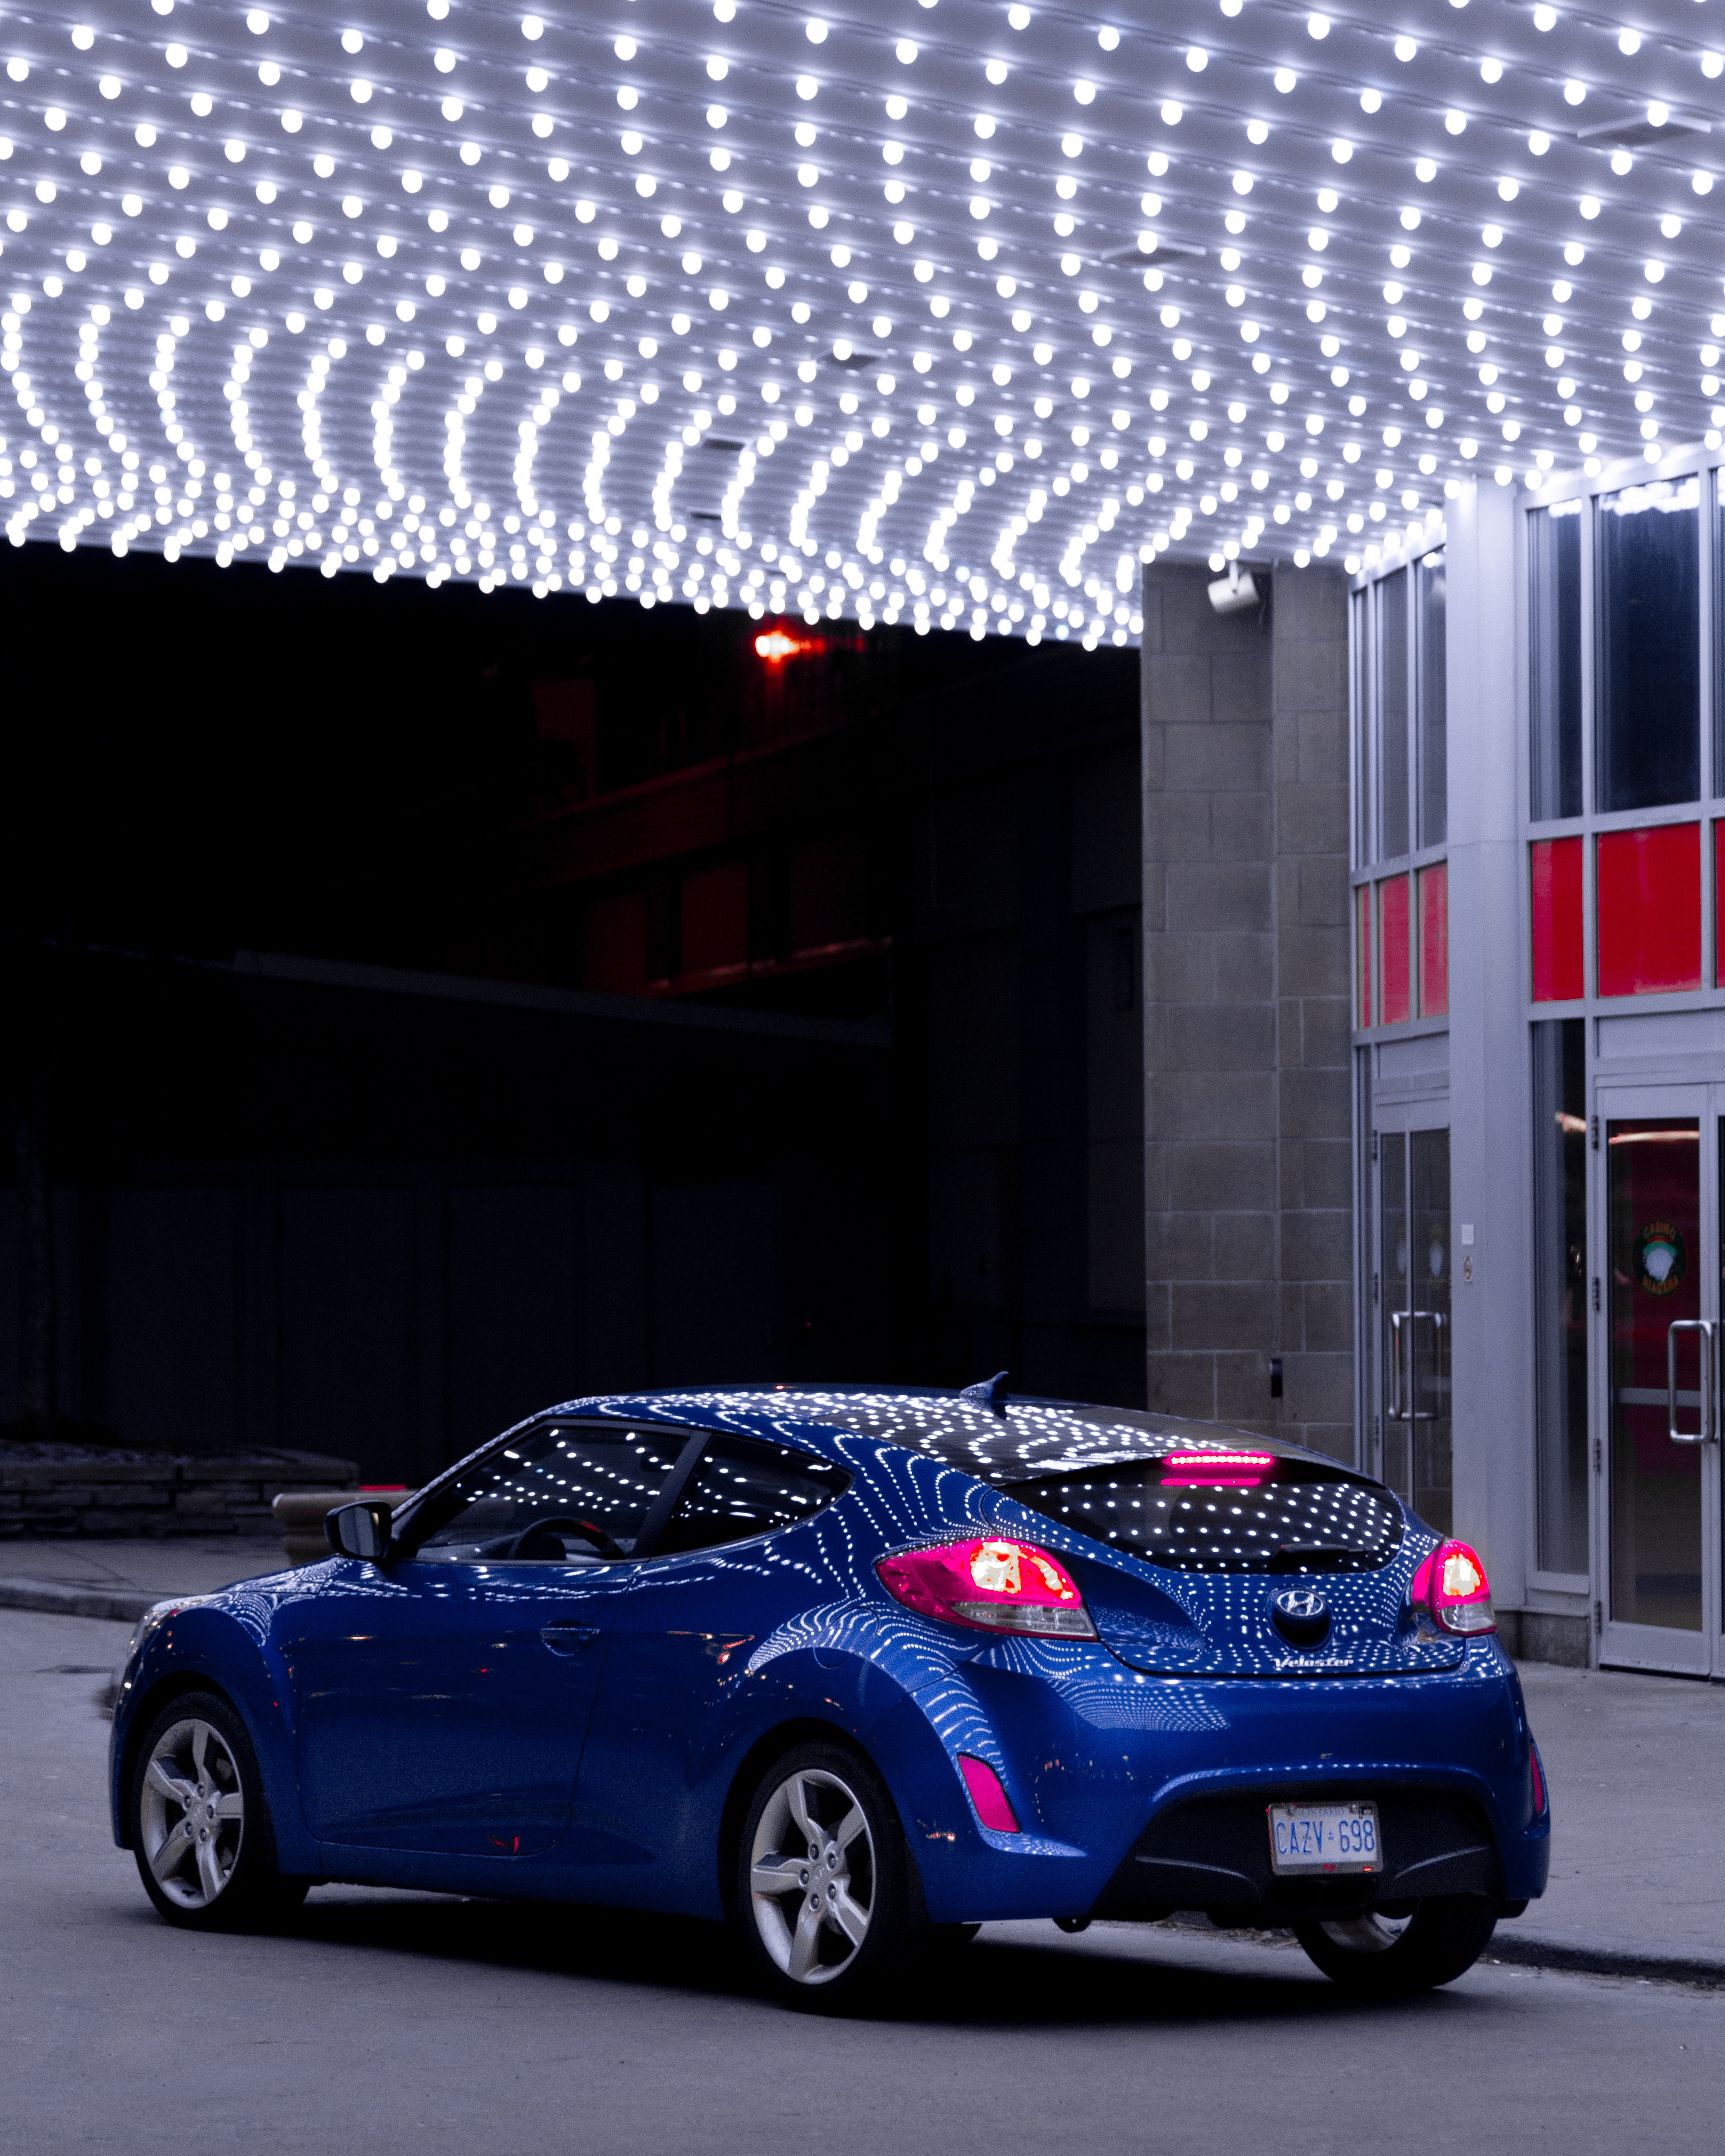 shine, hyundai, cars, blue, light, side view, street cellphone